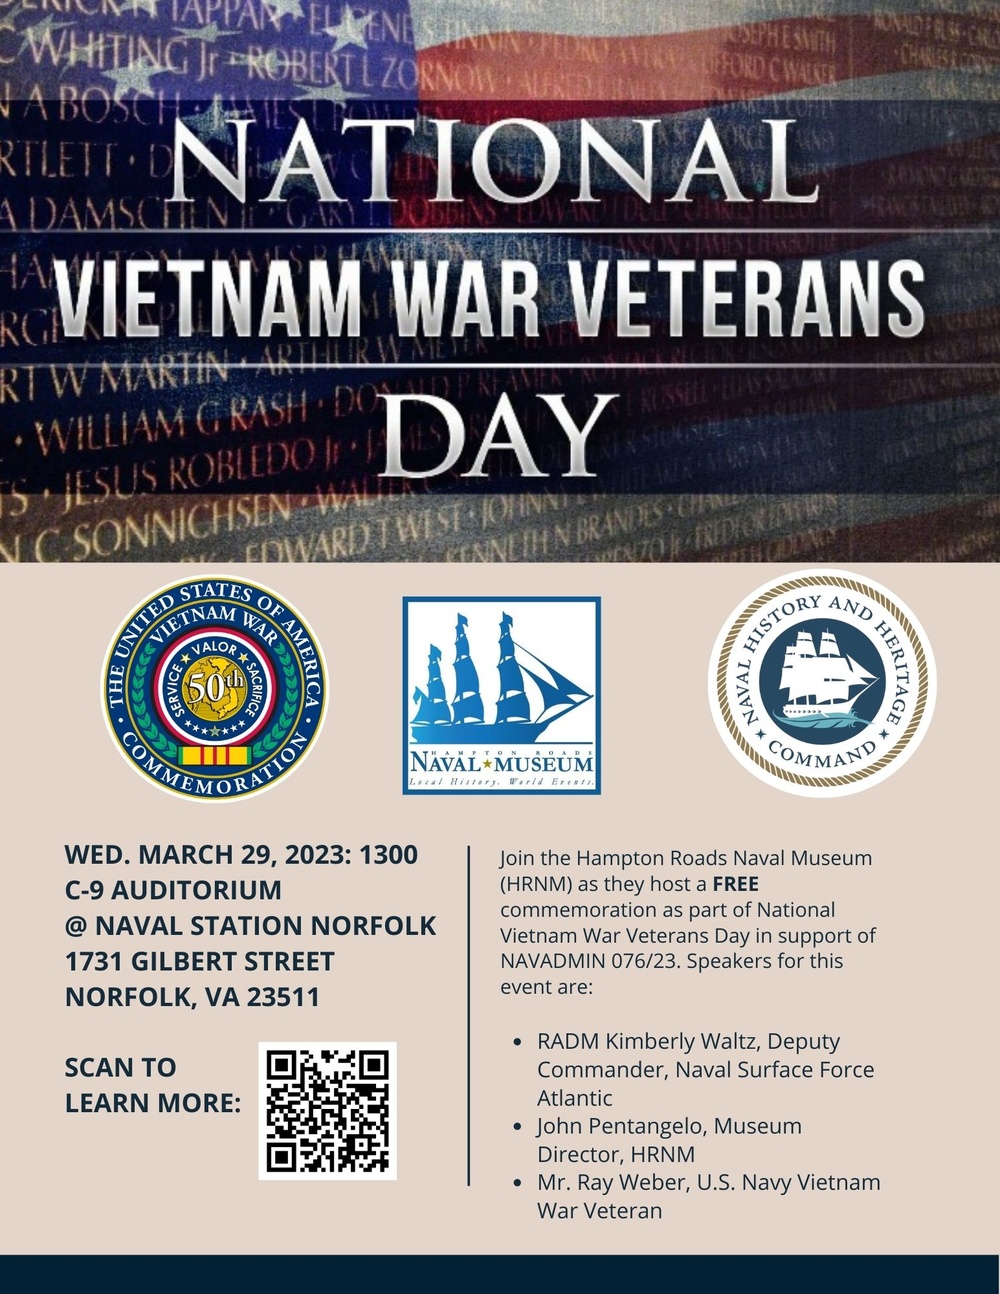 Naval Museum to host National Vietnam War Veterans Day event